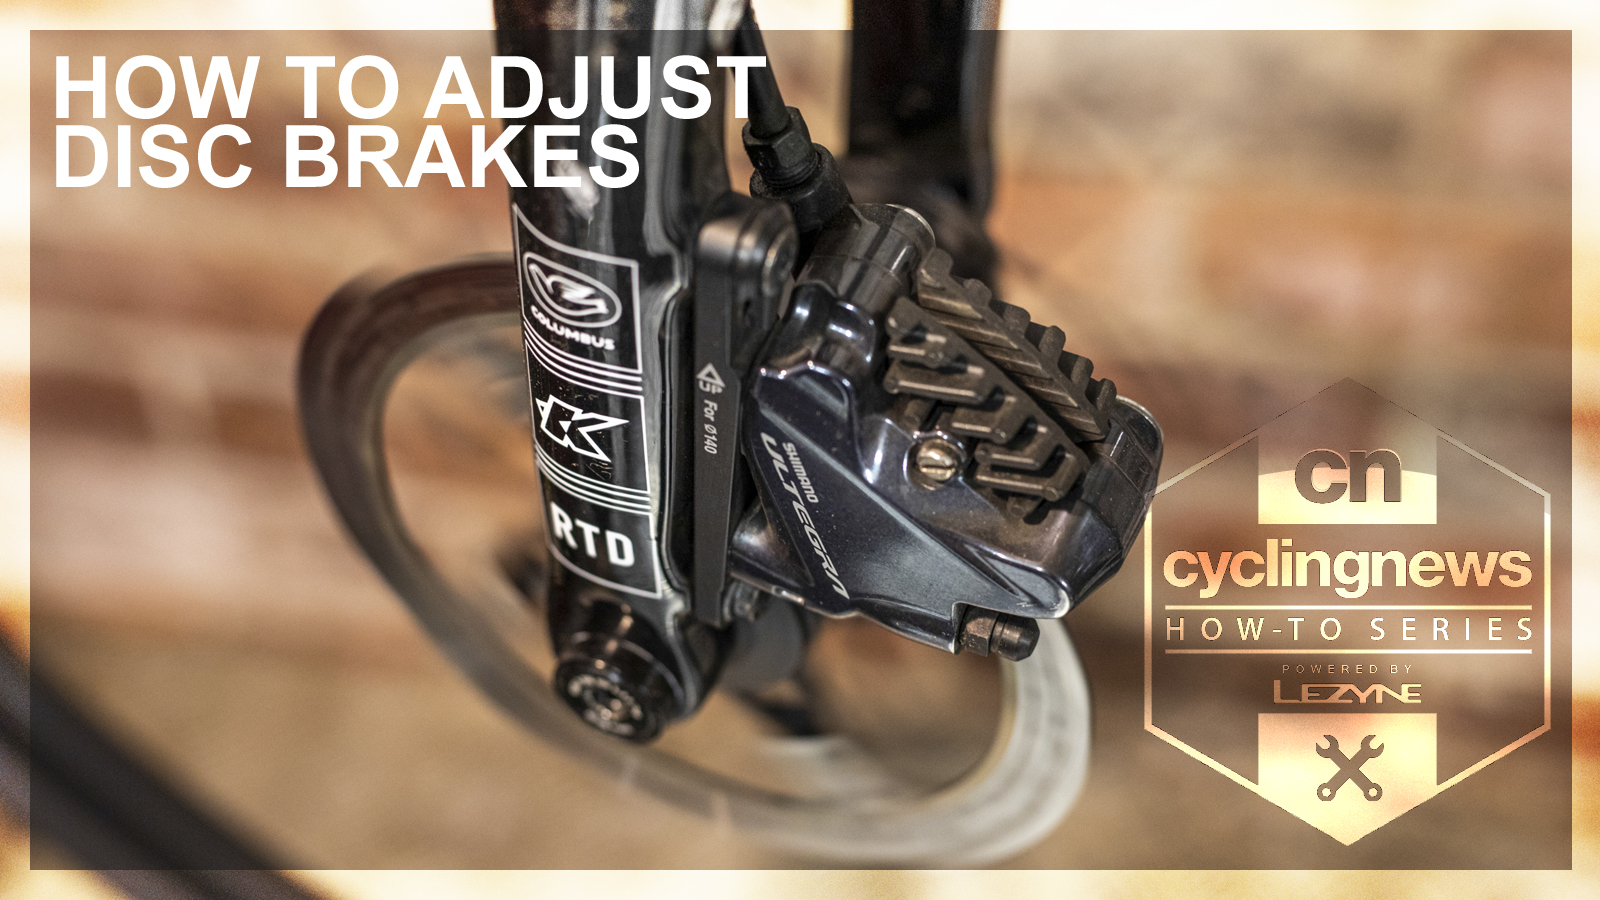 D Dymoece 2 pcs Bicycle Disc Brake Pads Adjustment Alignment Tool,Bike Disc Brake Gap Regulator 